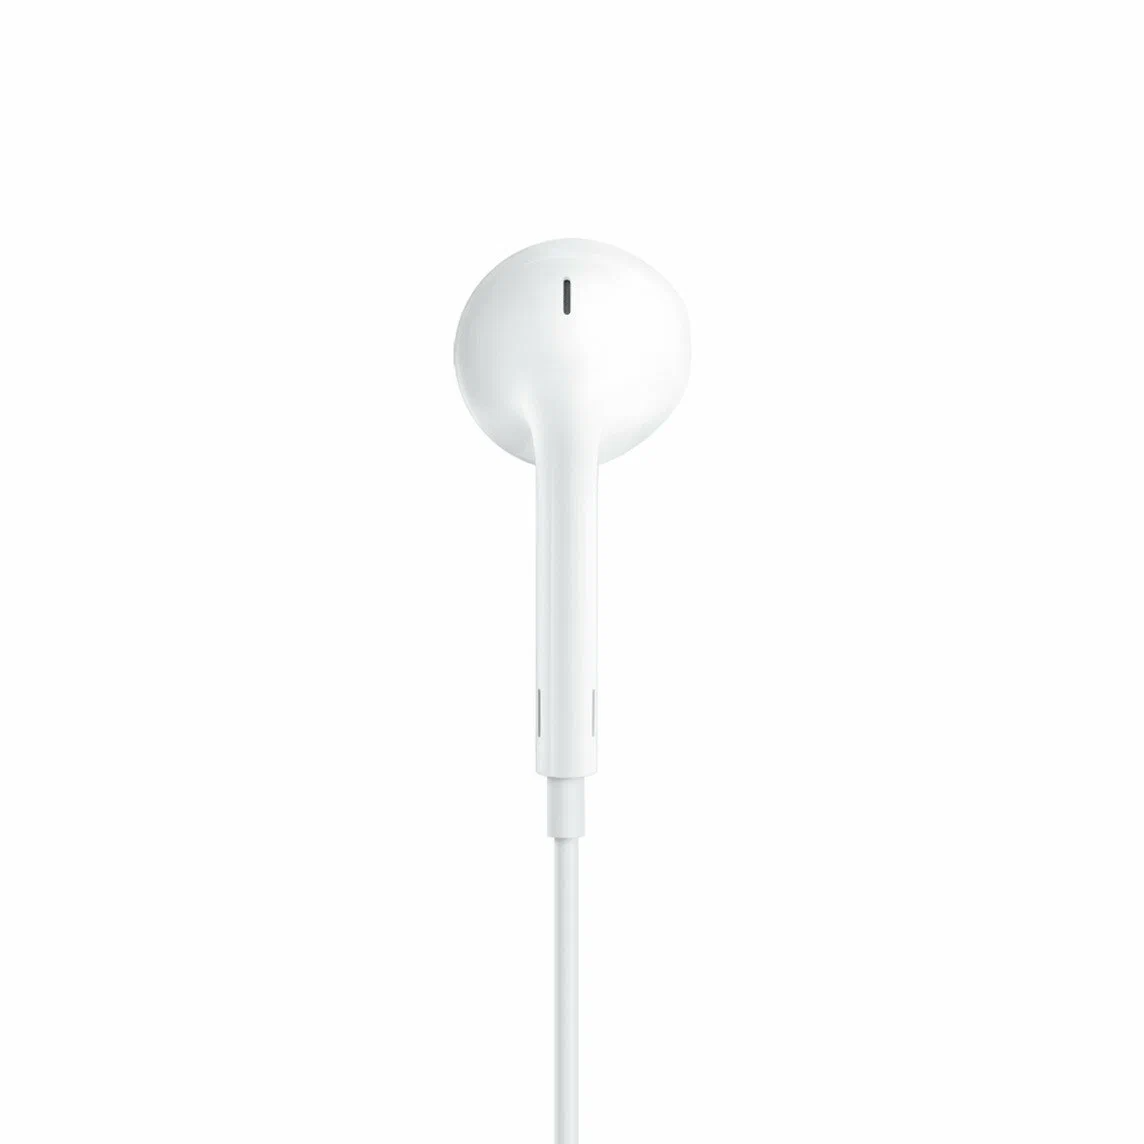 Наушники Apple EarPods (USB-C)